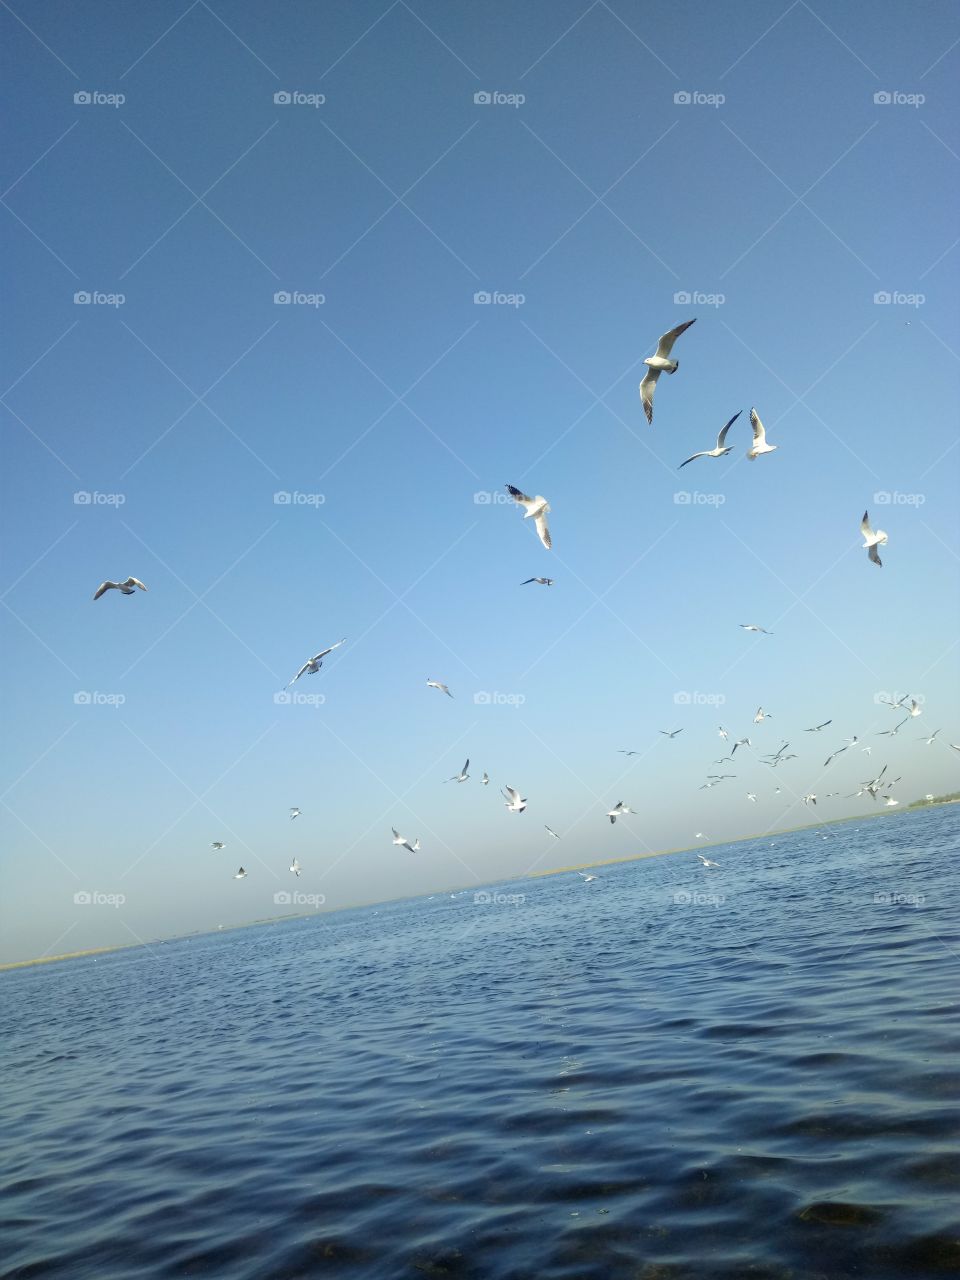 Flying white bird on water